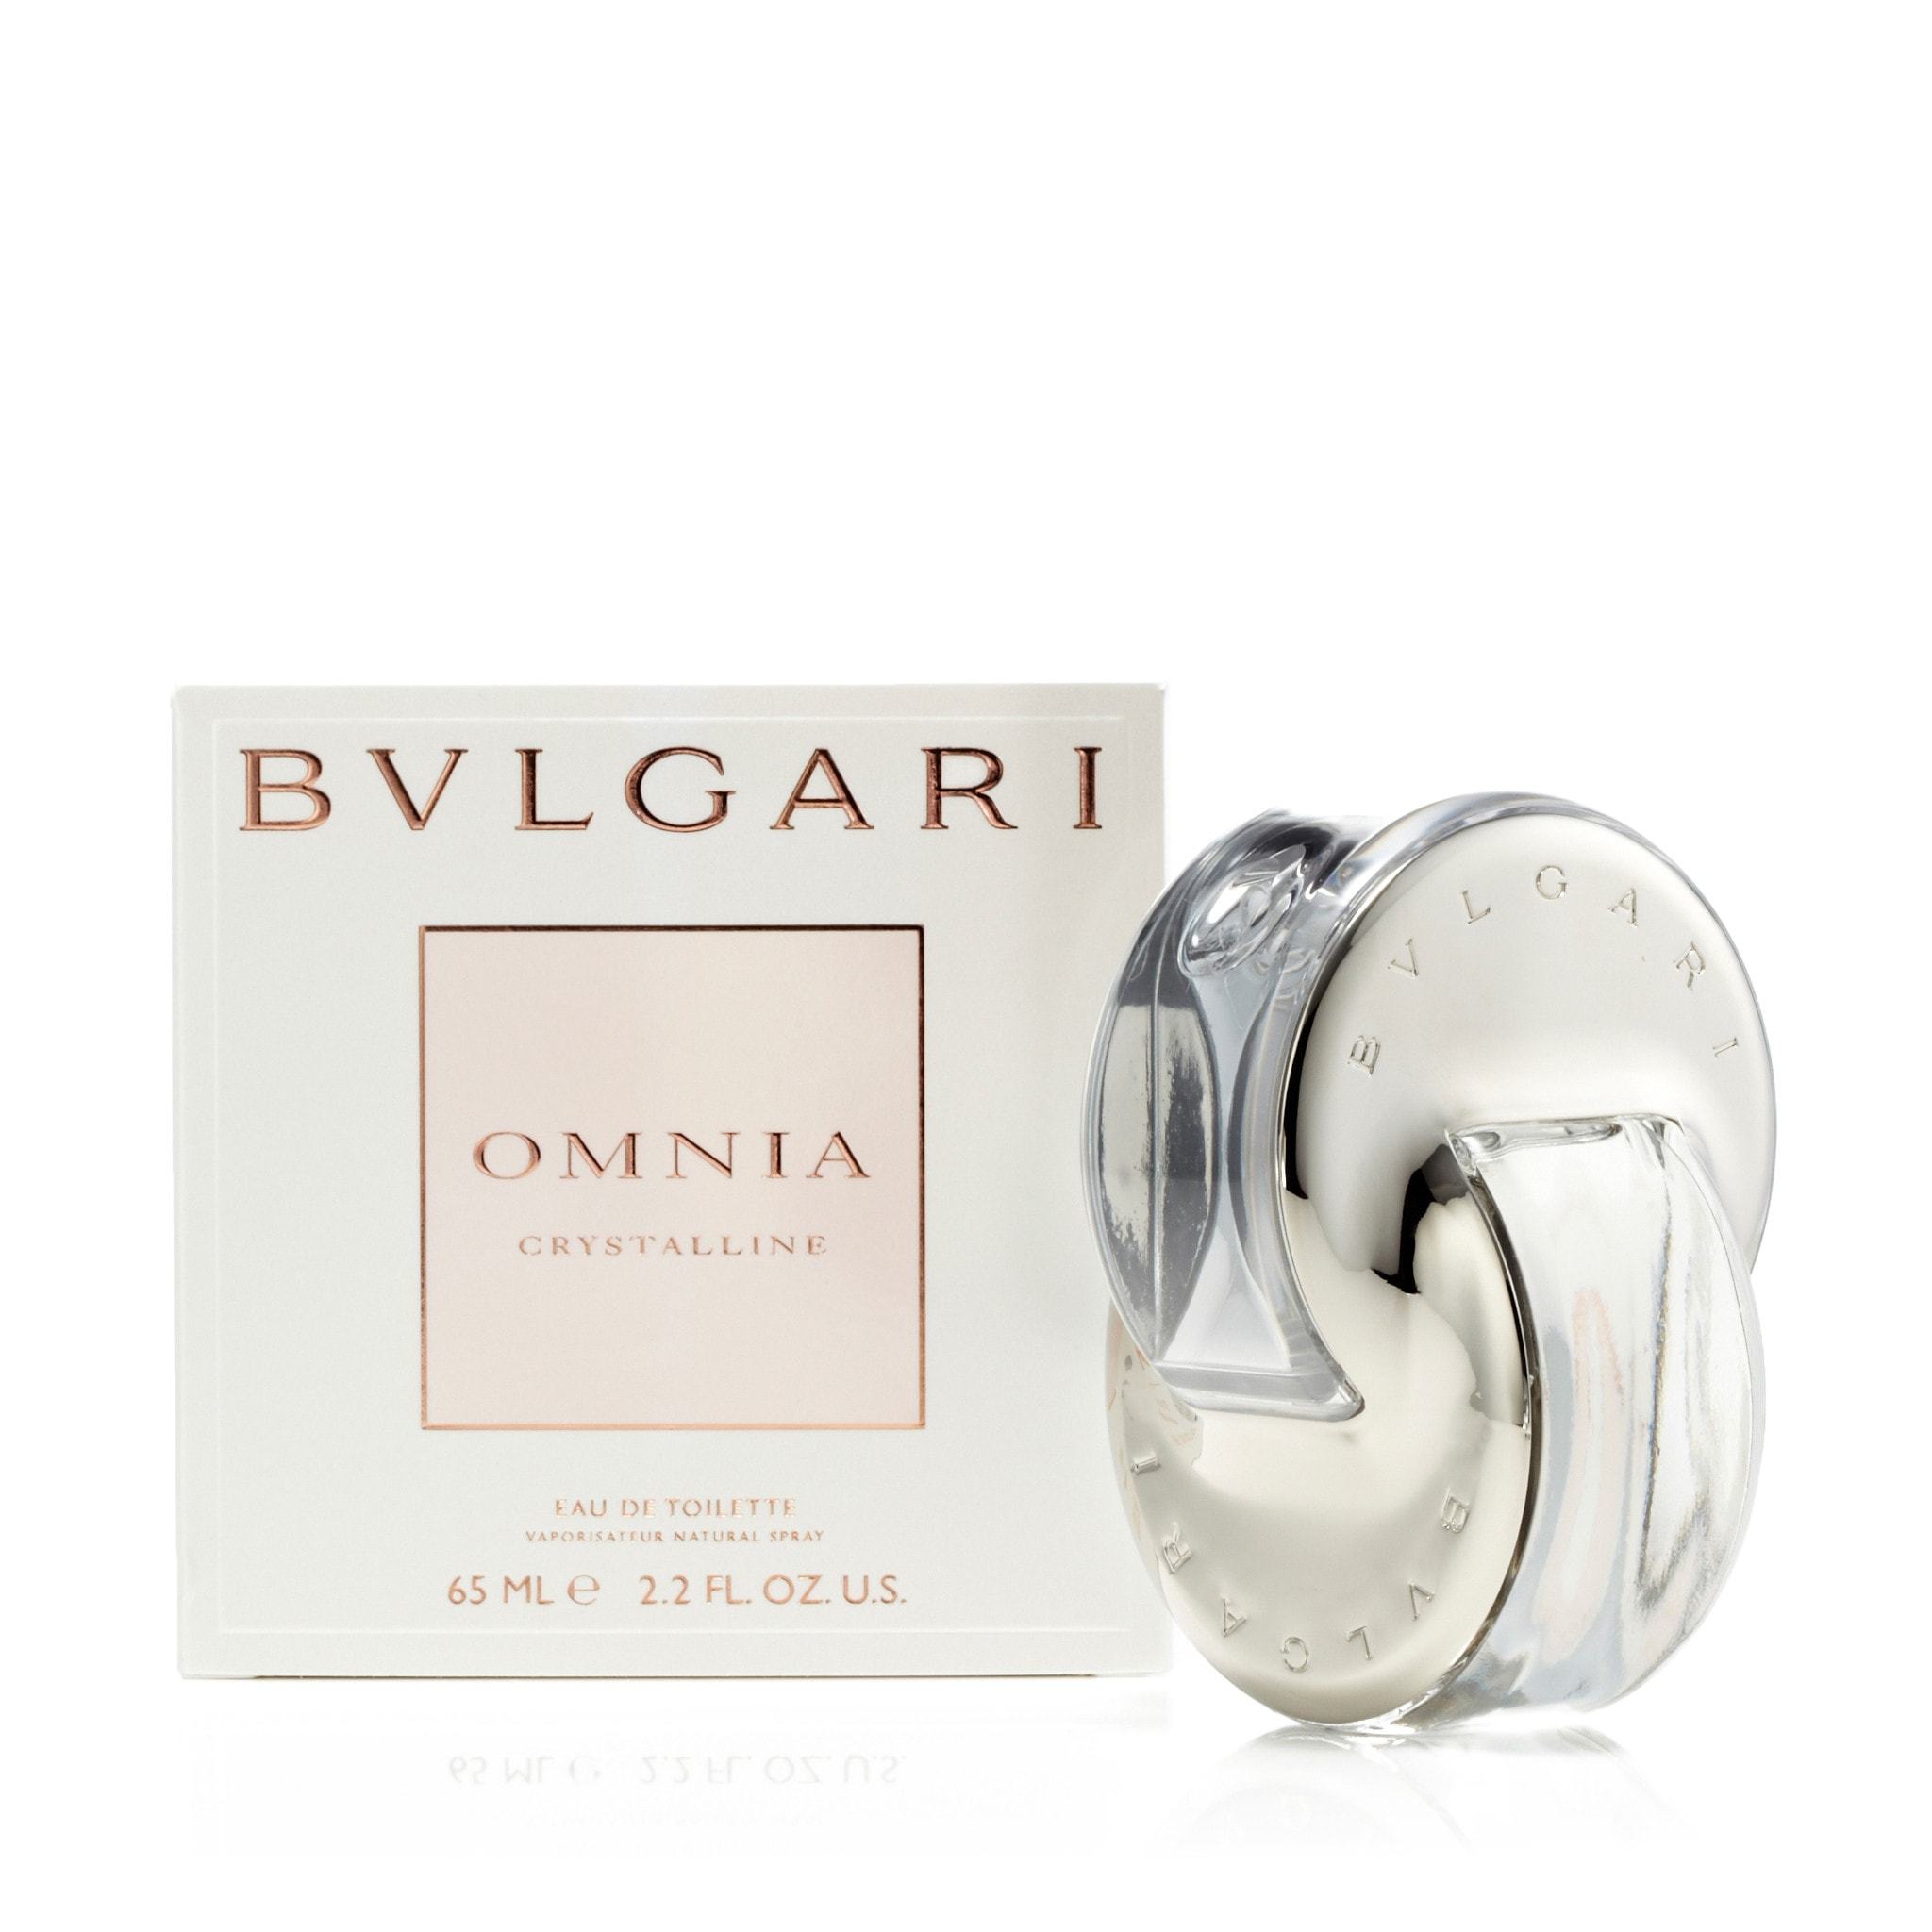 bvlgari omnia crystalline eau de toilette 65ml